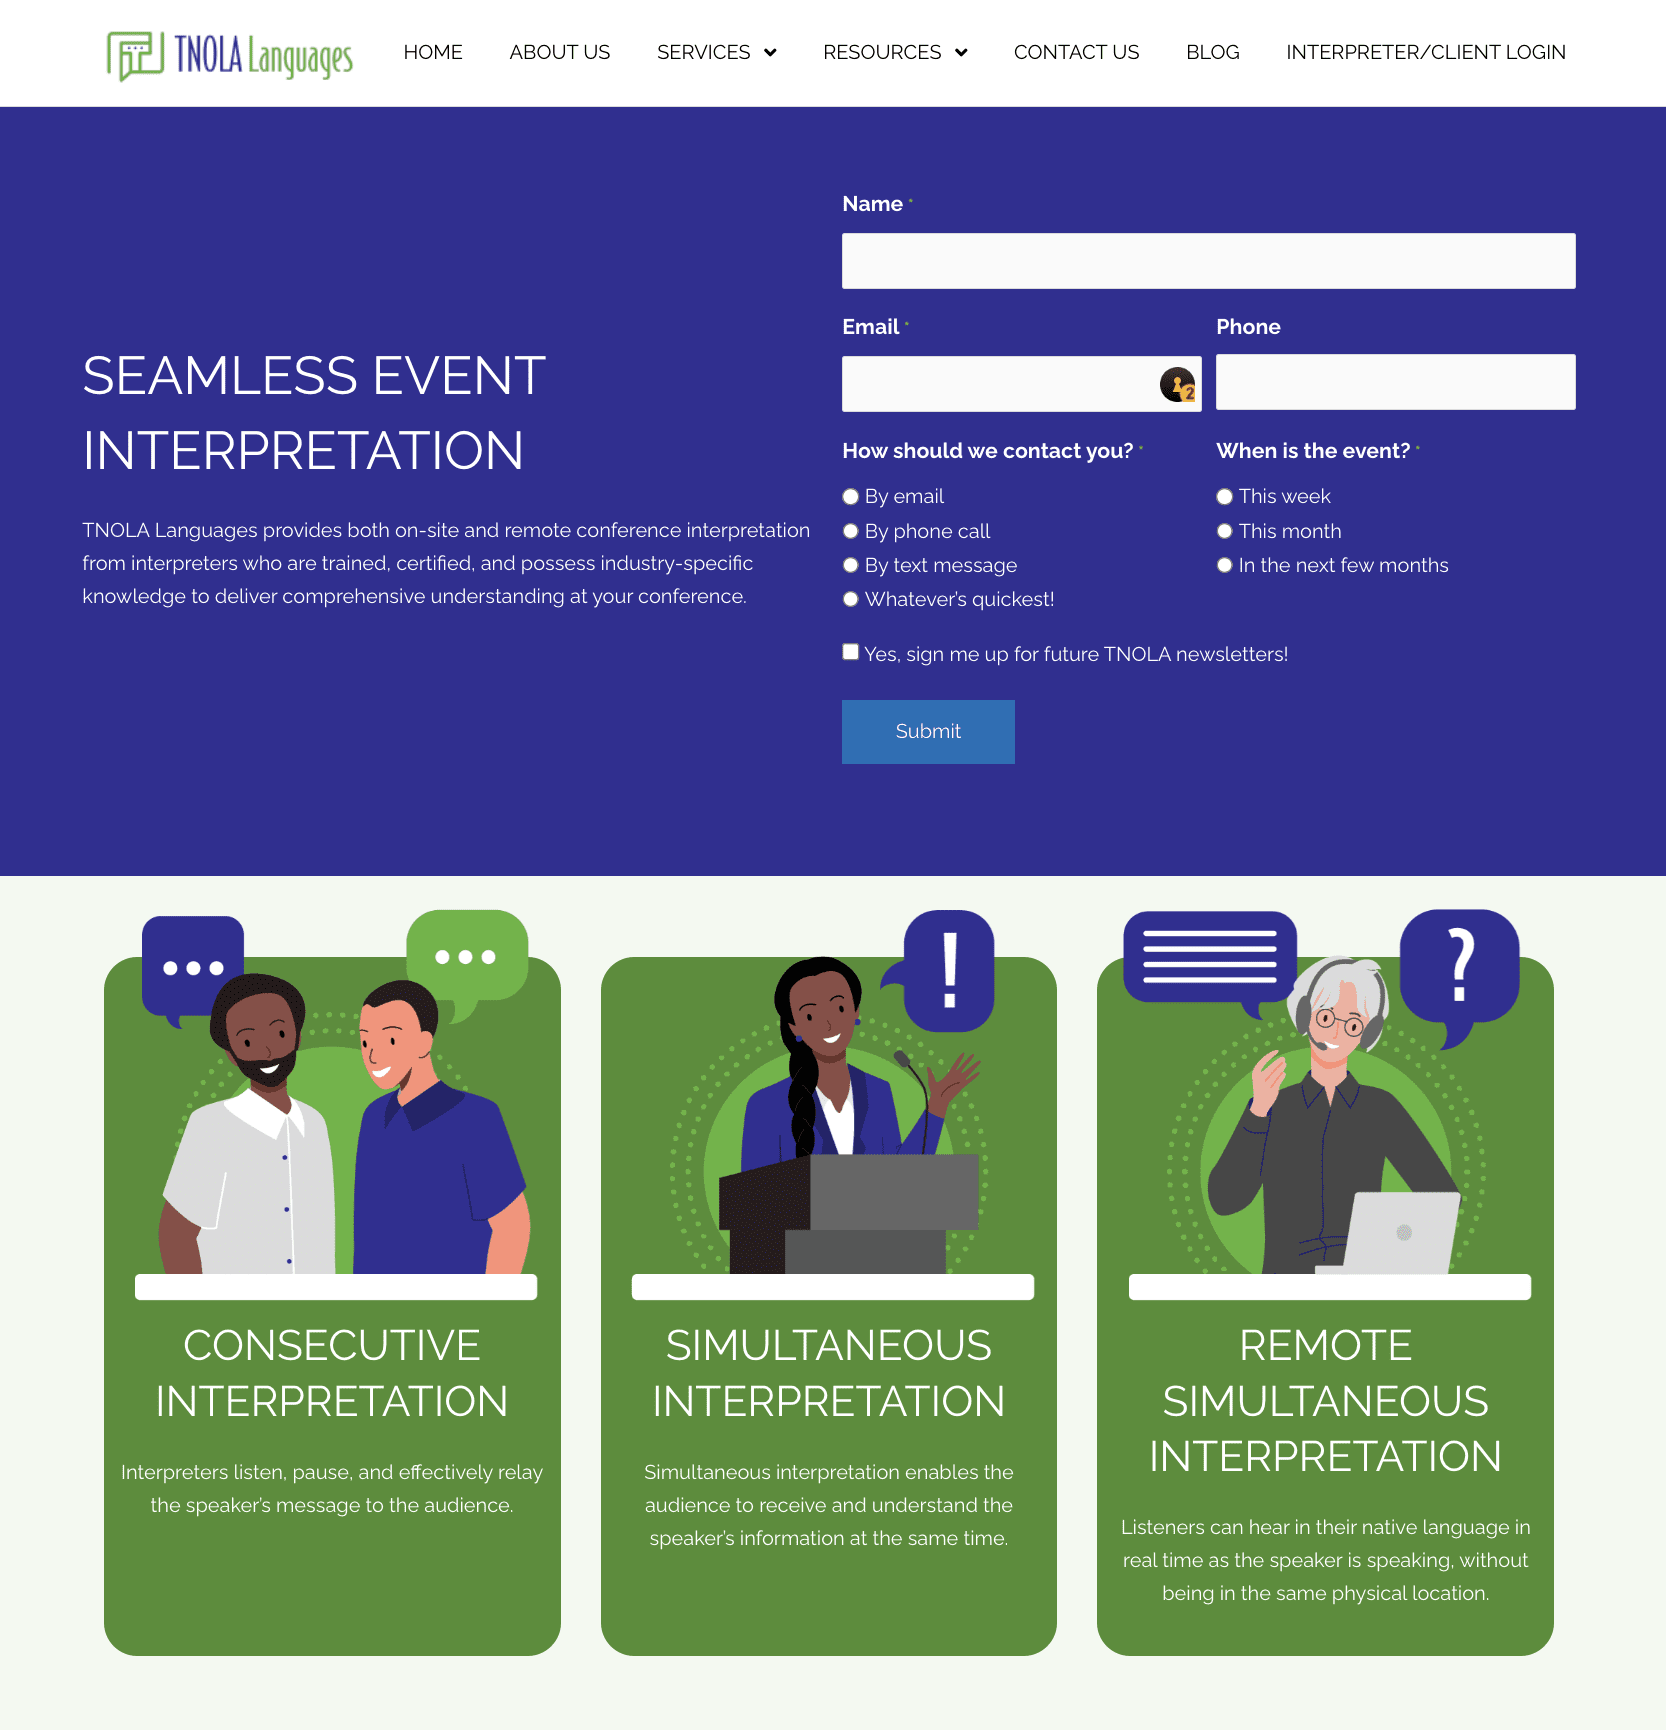 The TNOLA Languages website, showing their Seamless Event Interpretation services.